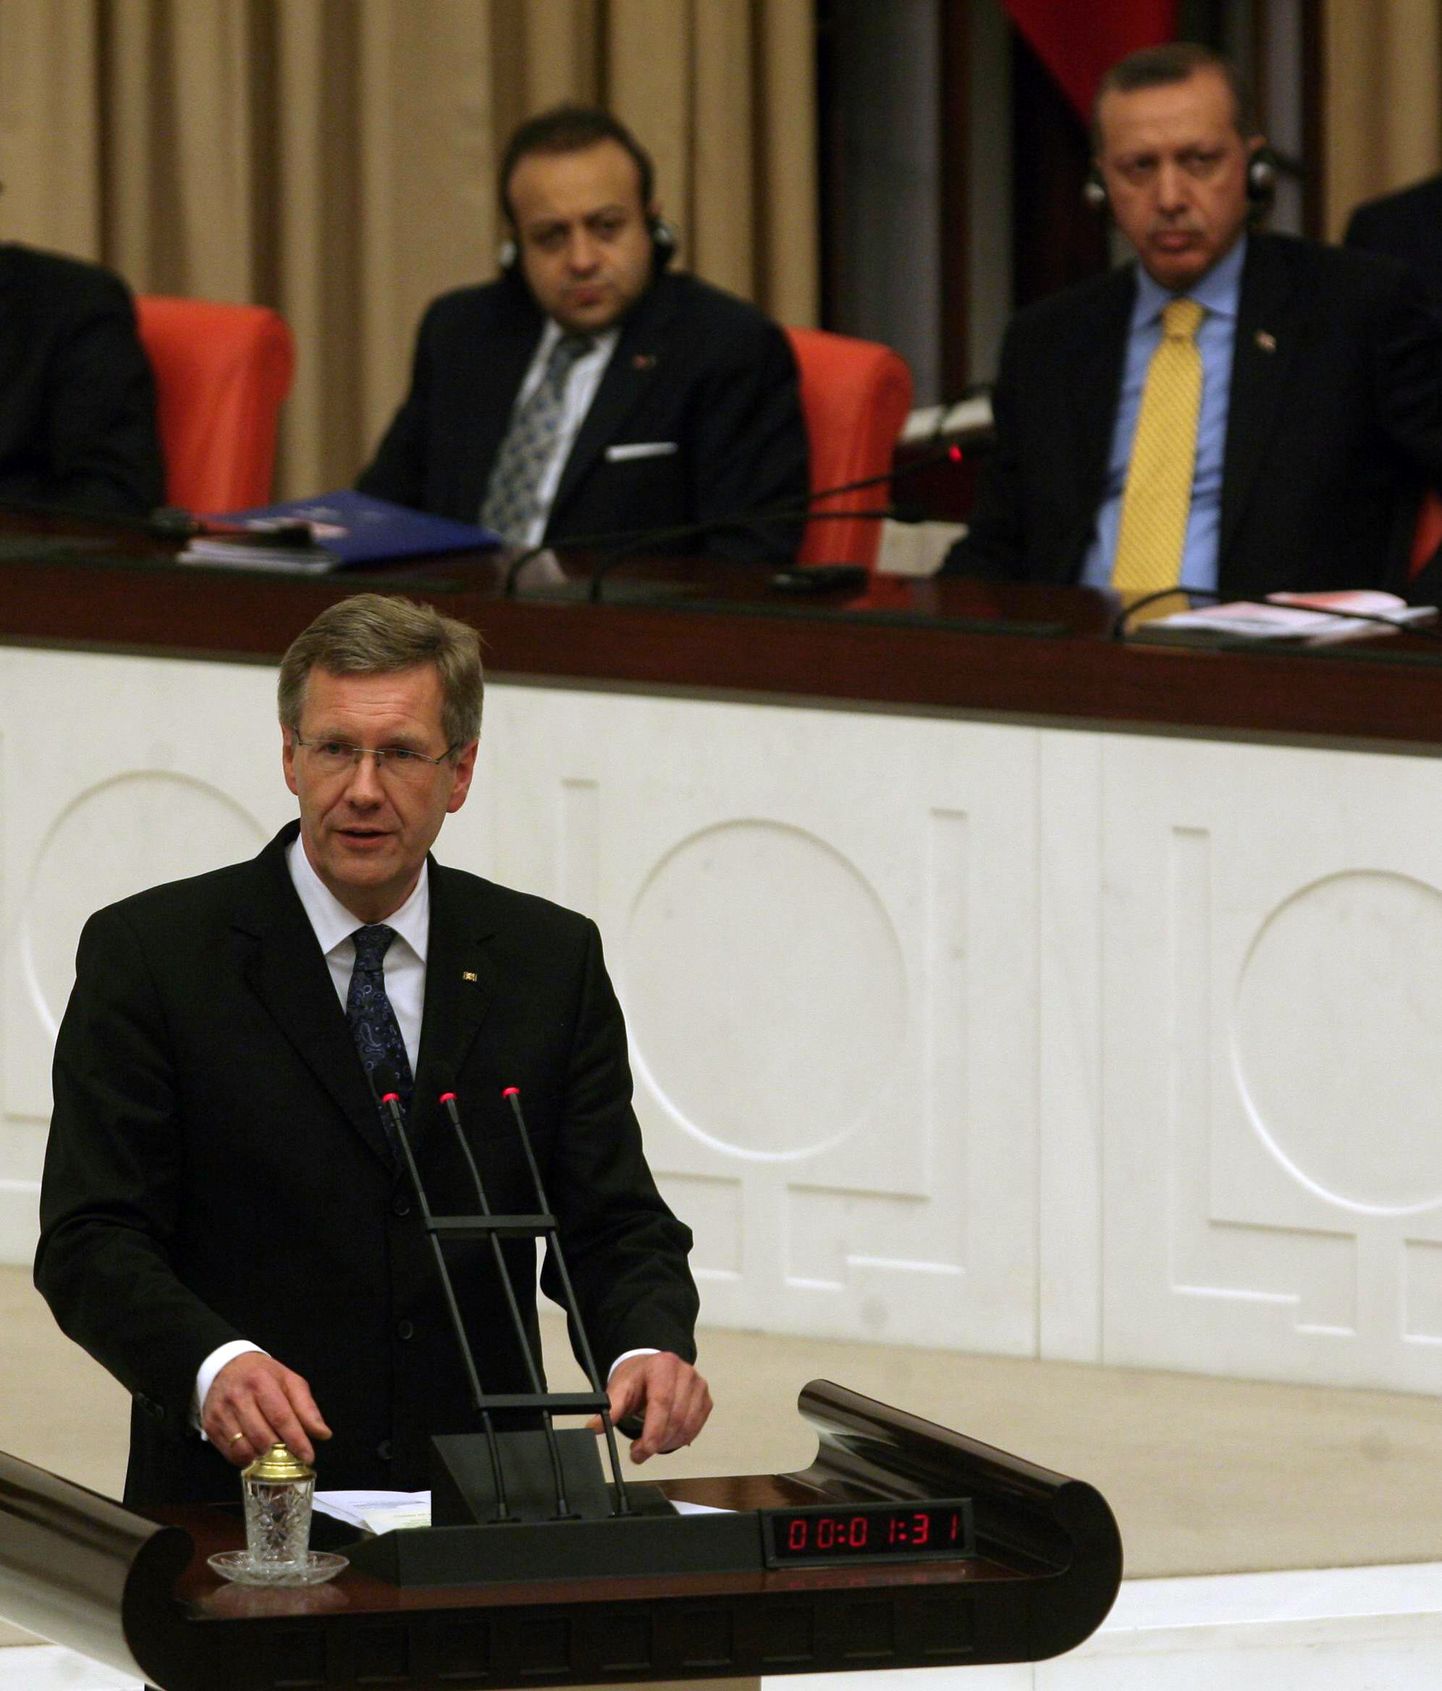 Saksa president Christian Wulff Türgi parlamendis kõnet pidamas.